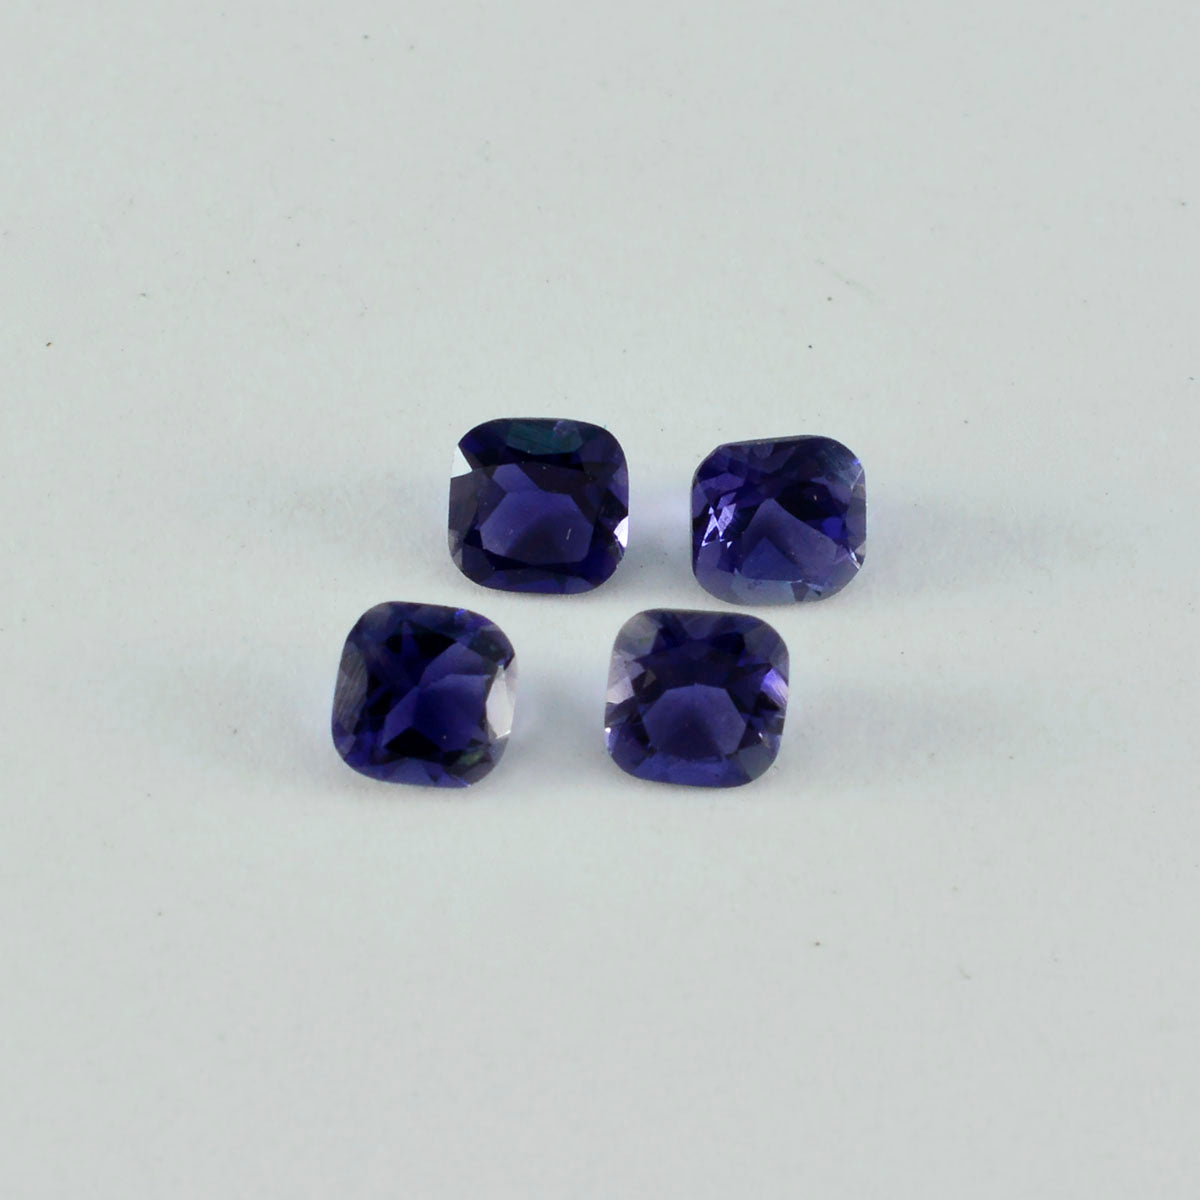 Riyogems 1PC Blue Iolite Faceted 6x6 mm Cushion Shape excellent Quality Loose Gemstone